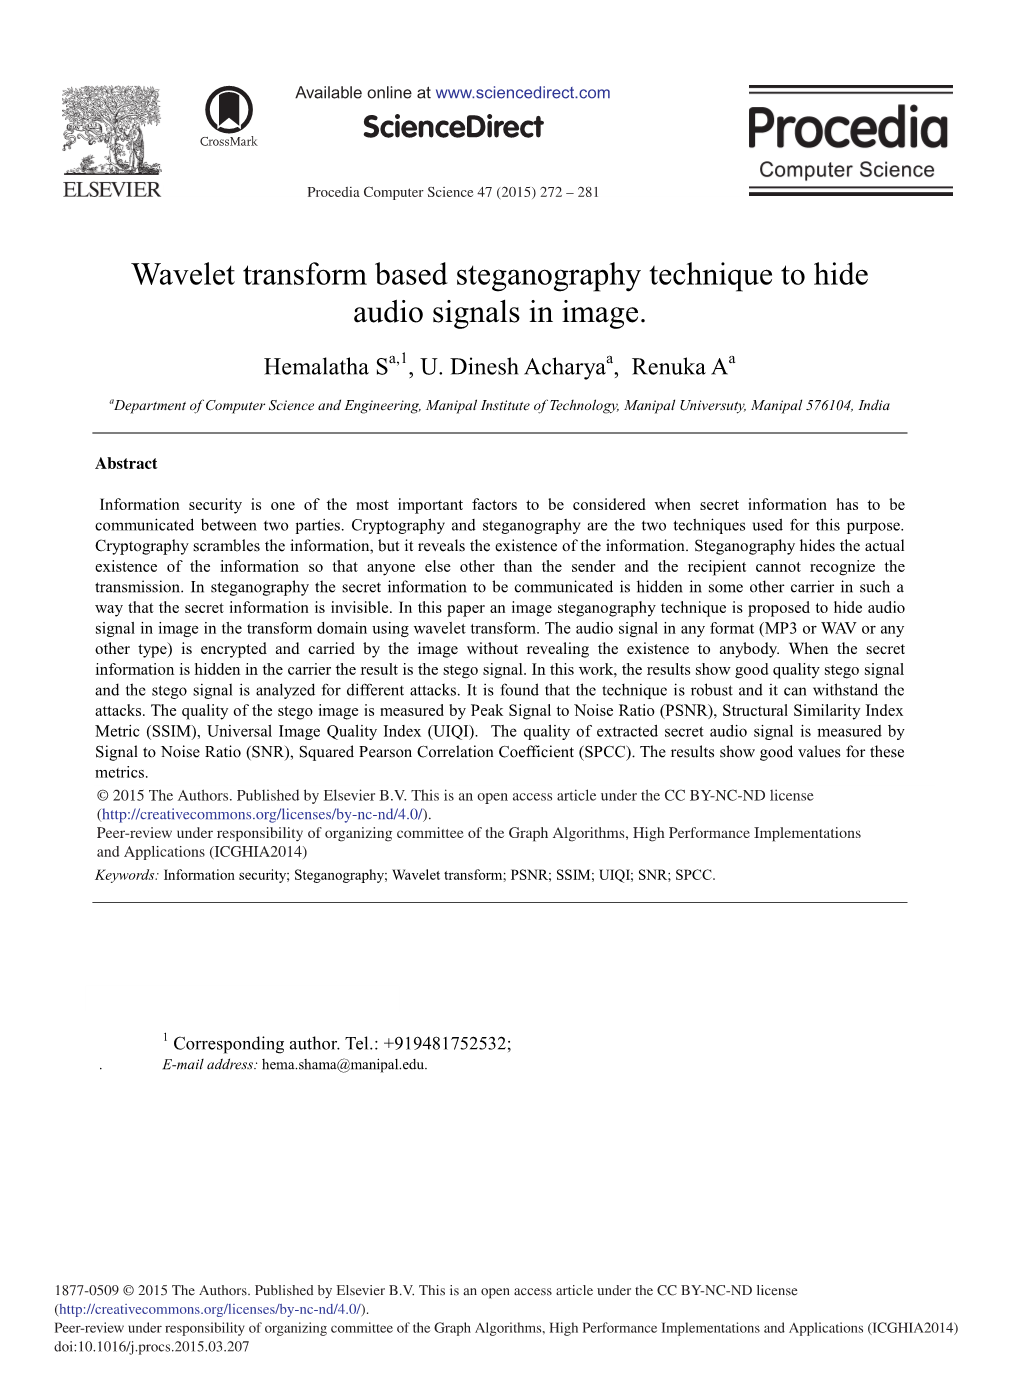 Wavelet Transform Based Steganography Technique to Hide Audio Signals in Image